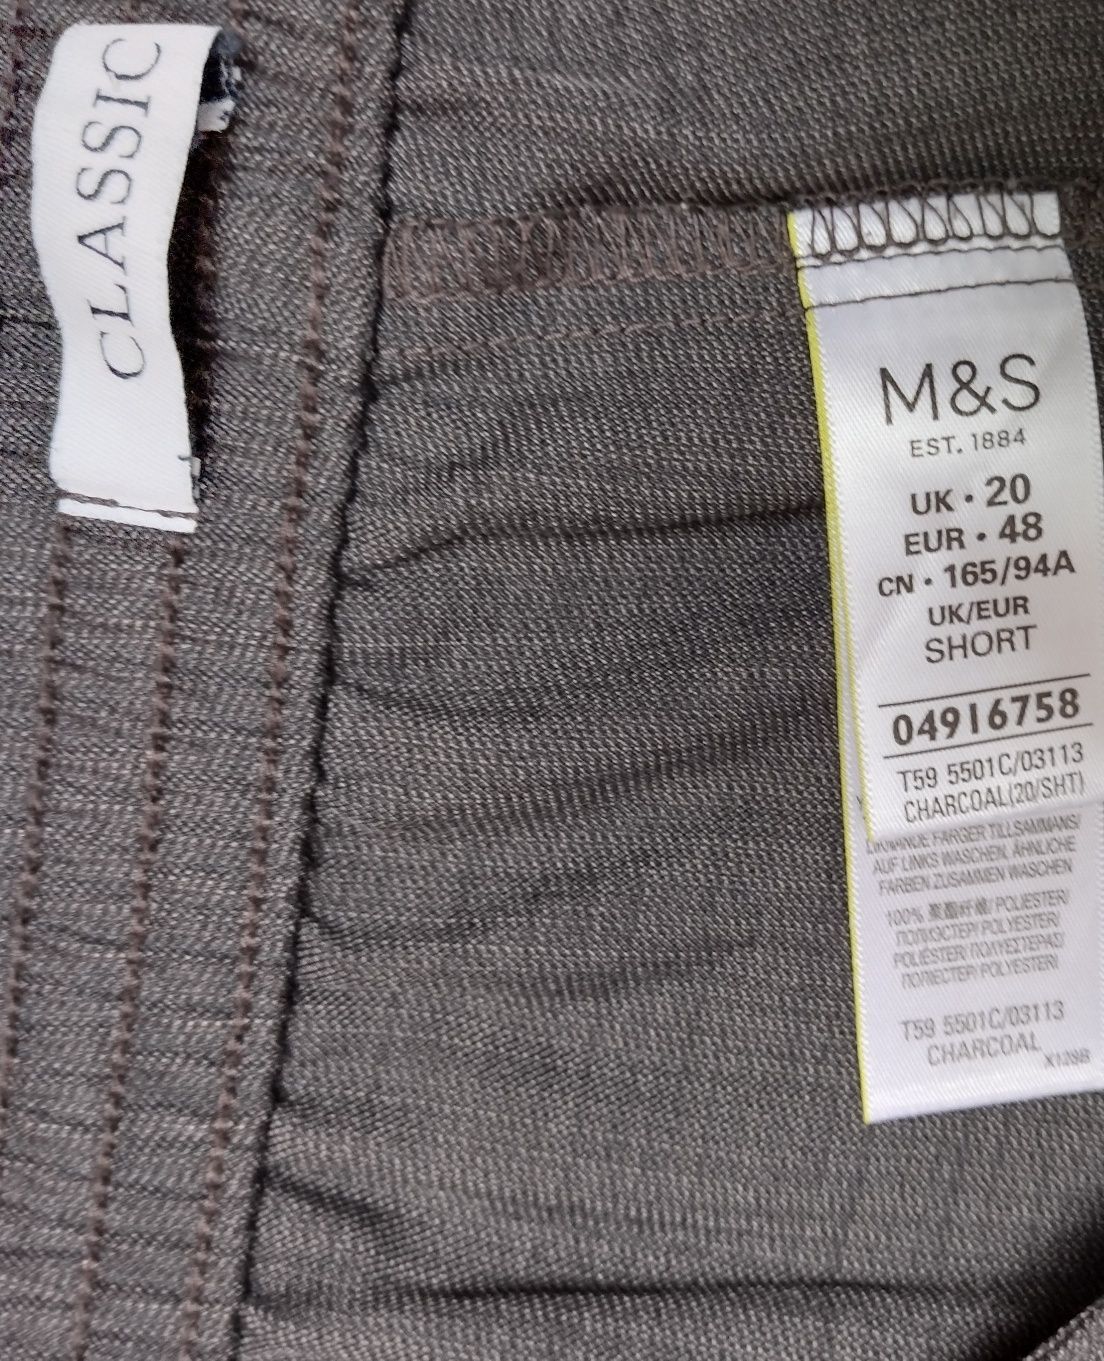 Spodnie materiałowe damskie firmy Marks & Spencer, rozmiar 46/48